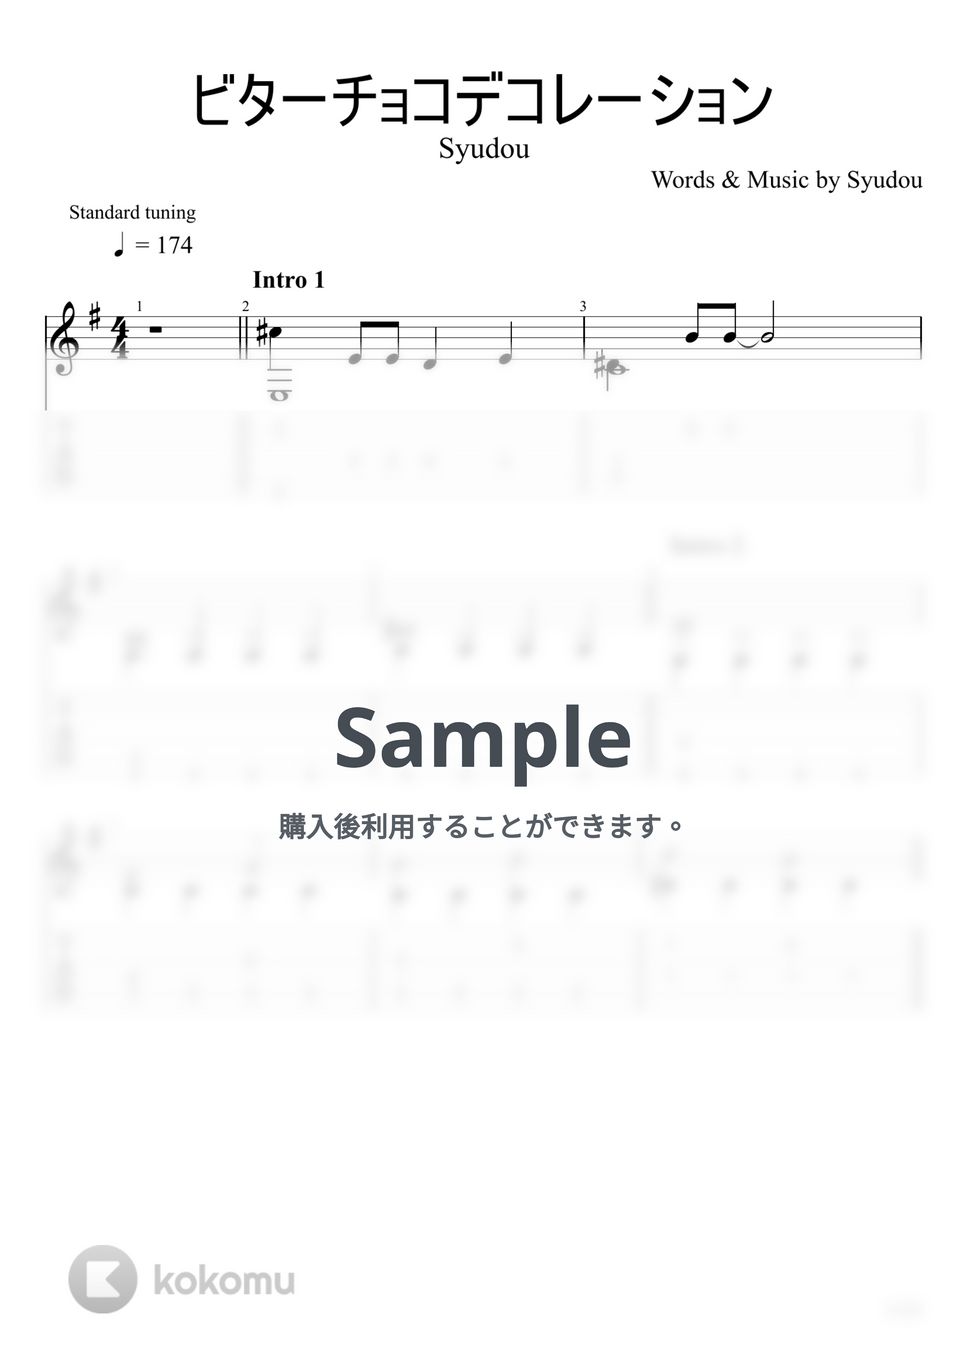 syudou - ビターチョコデコレーション (ソロギター) by u3danchou